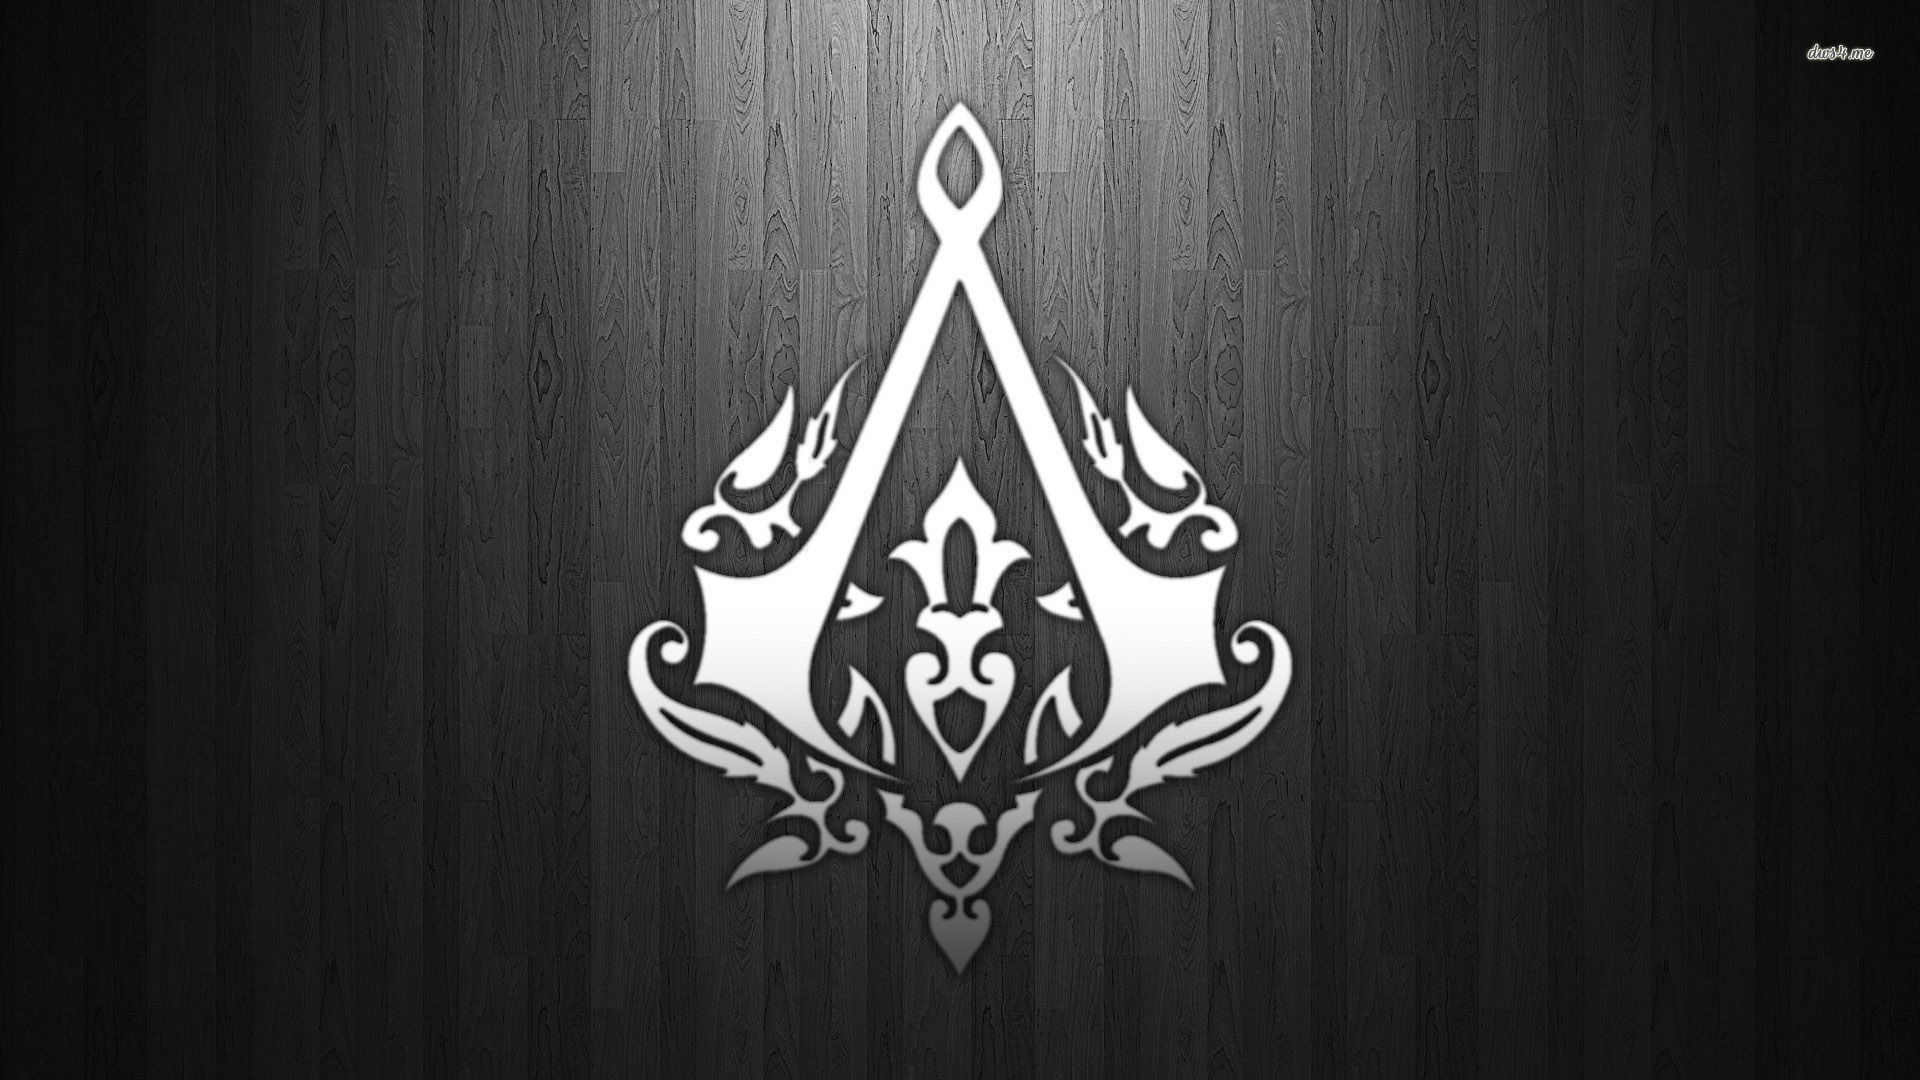 1920x1080 Assassin's Creed Logo wallpaper - 1204205